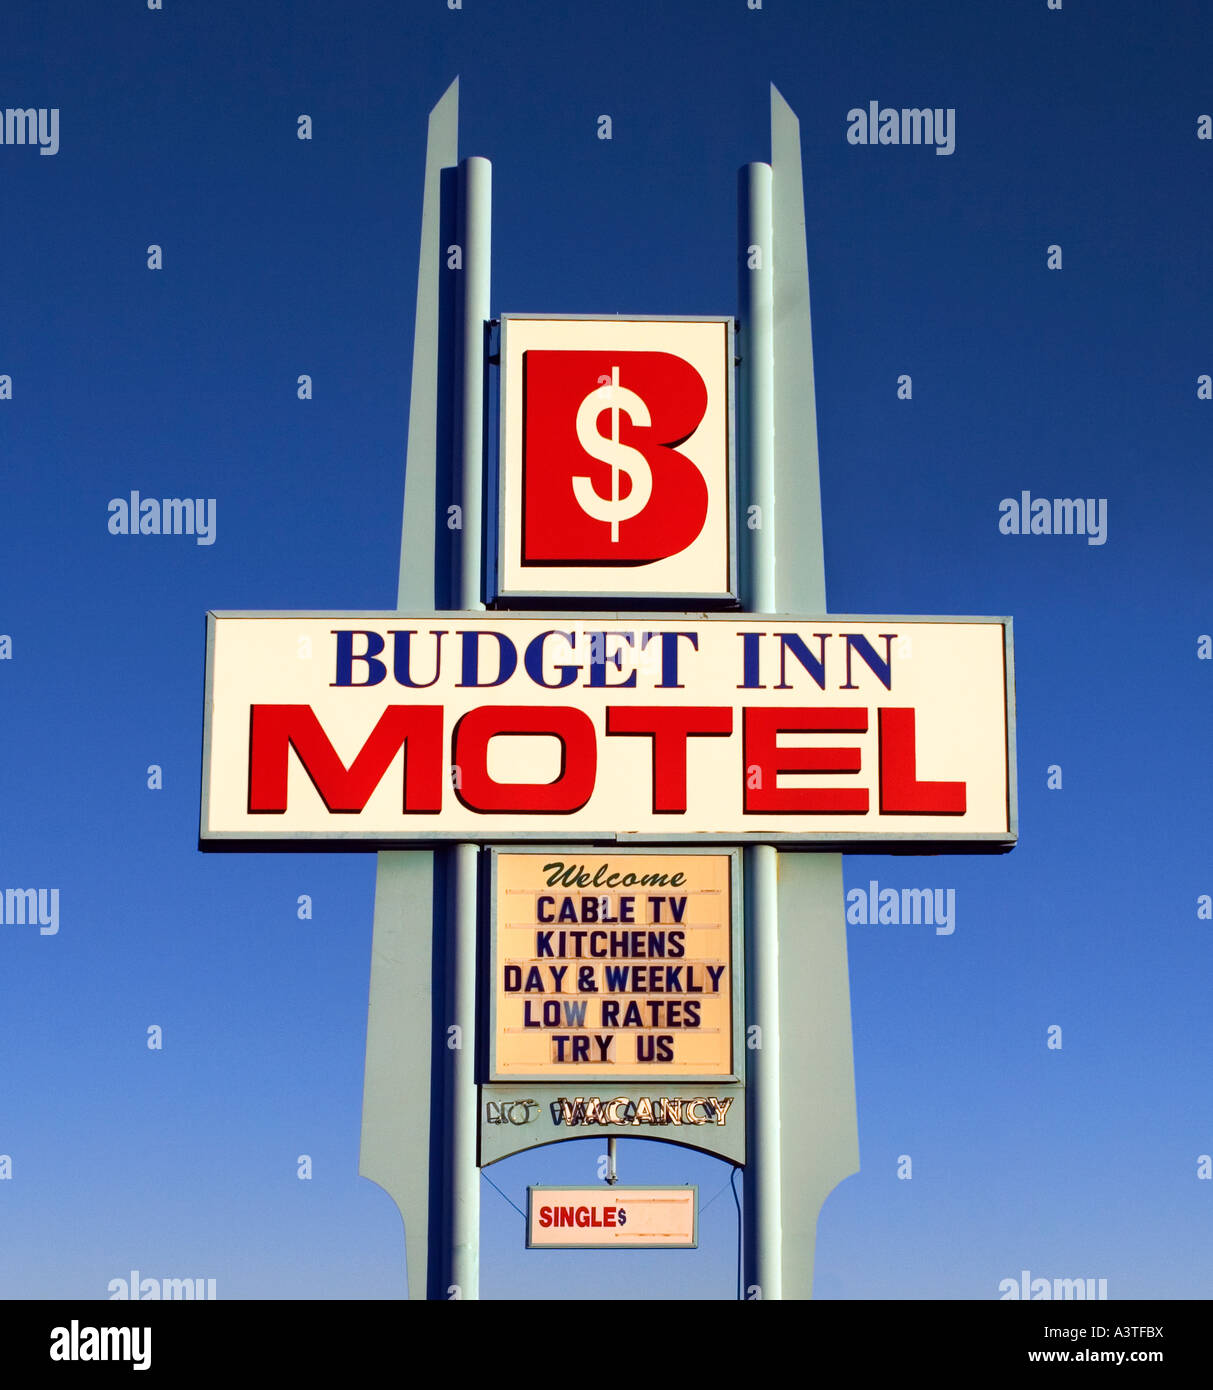 Budget Inn Motel sign in Indio California Stock Photo - Alamy